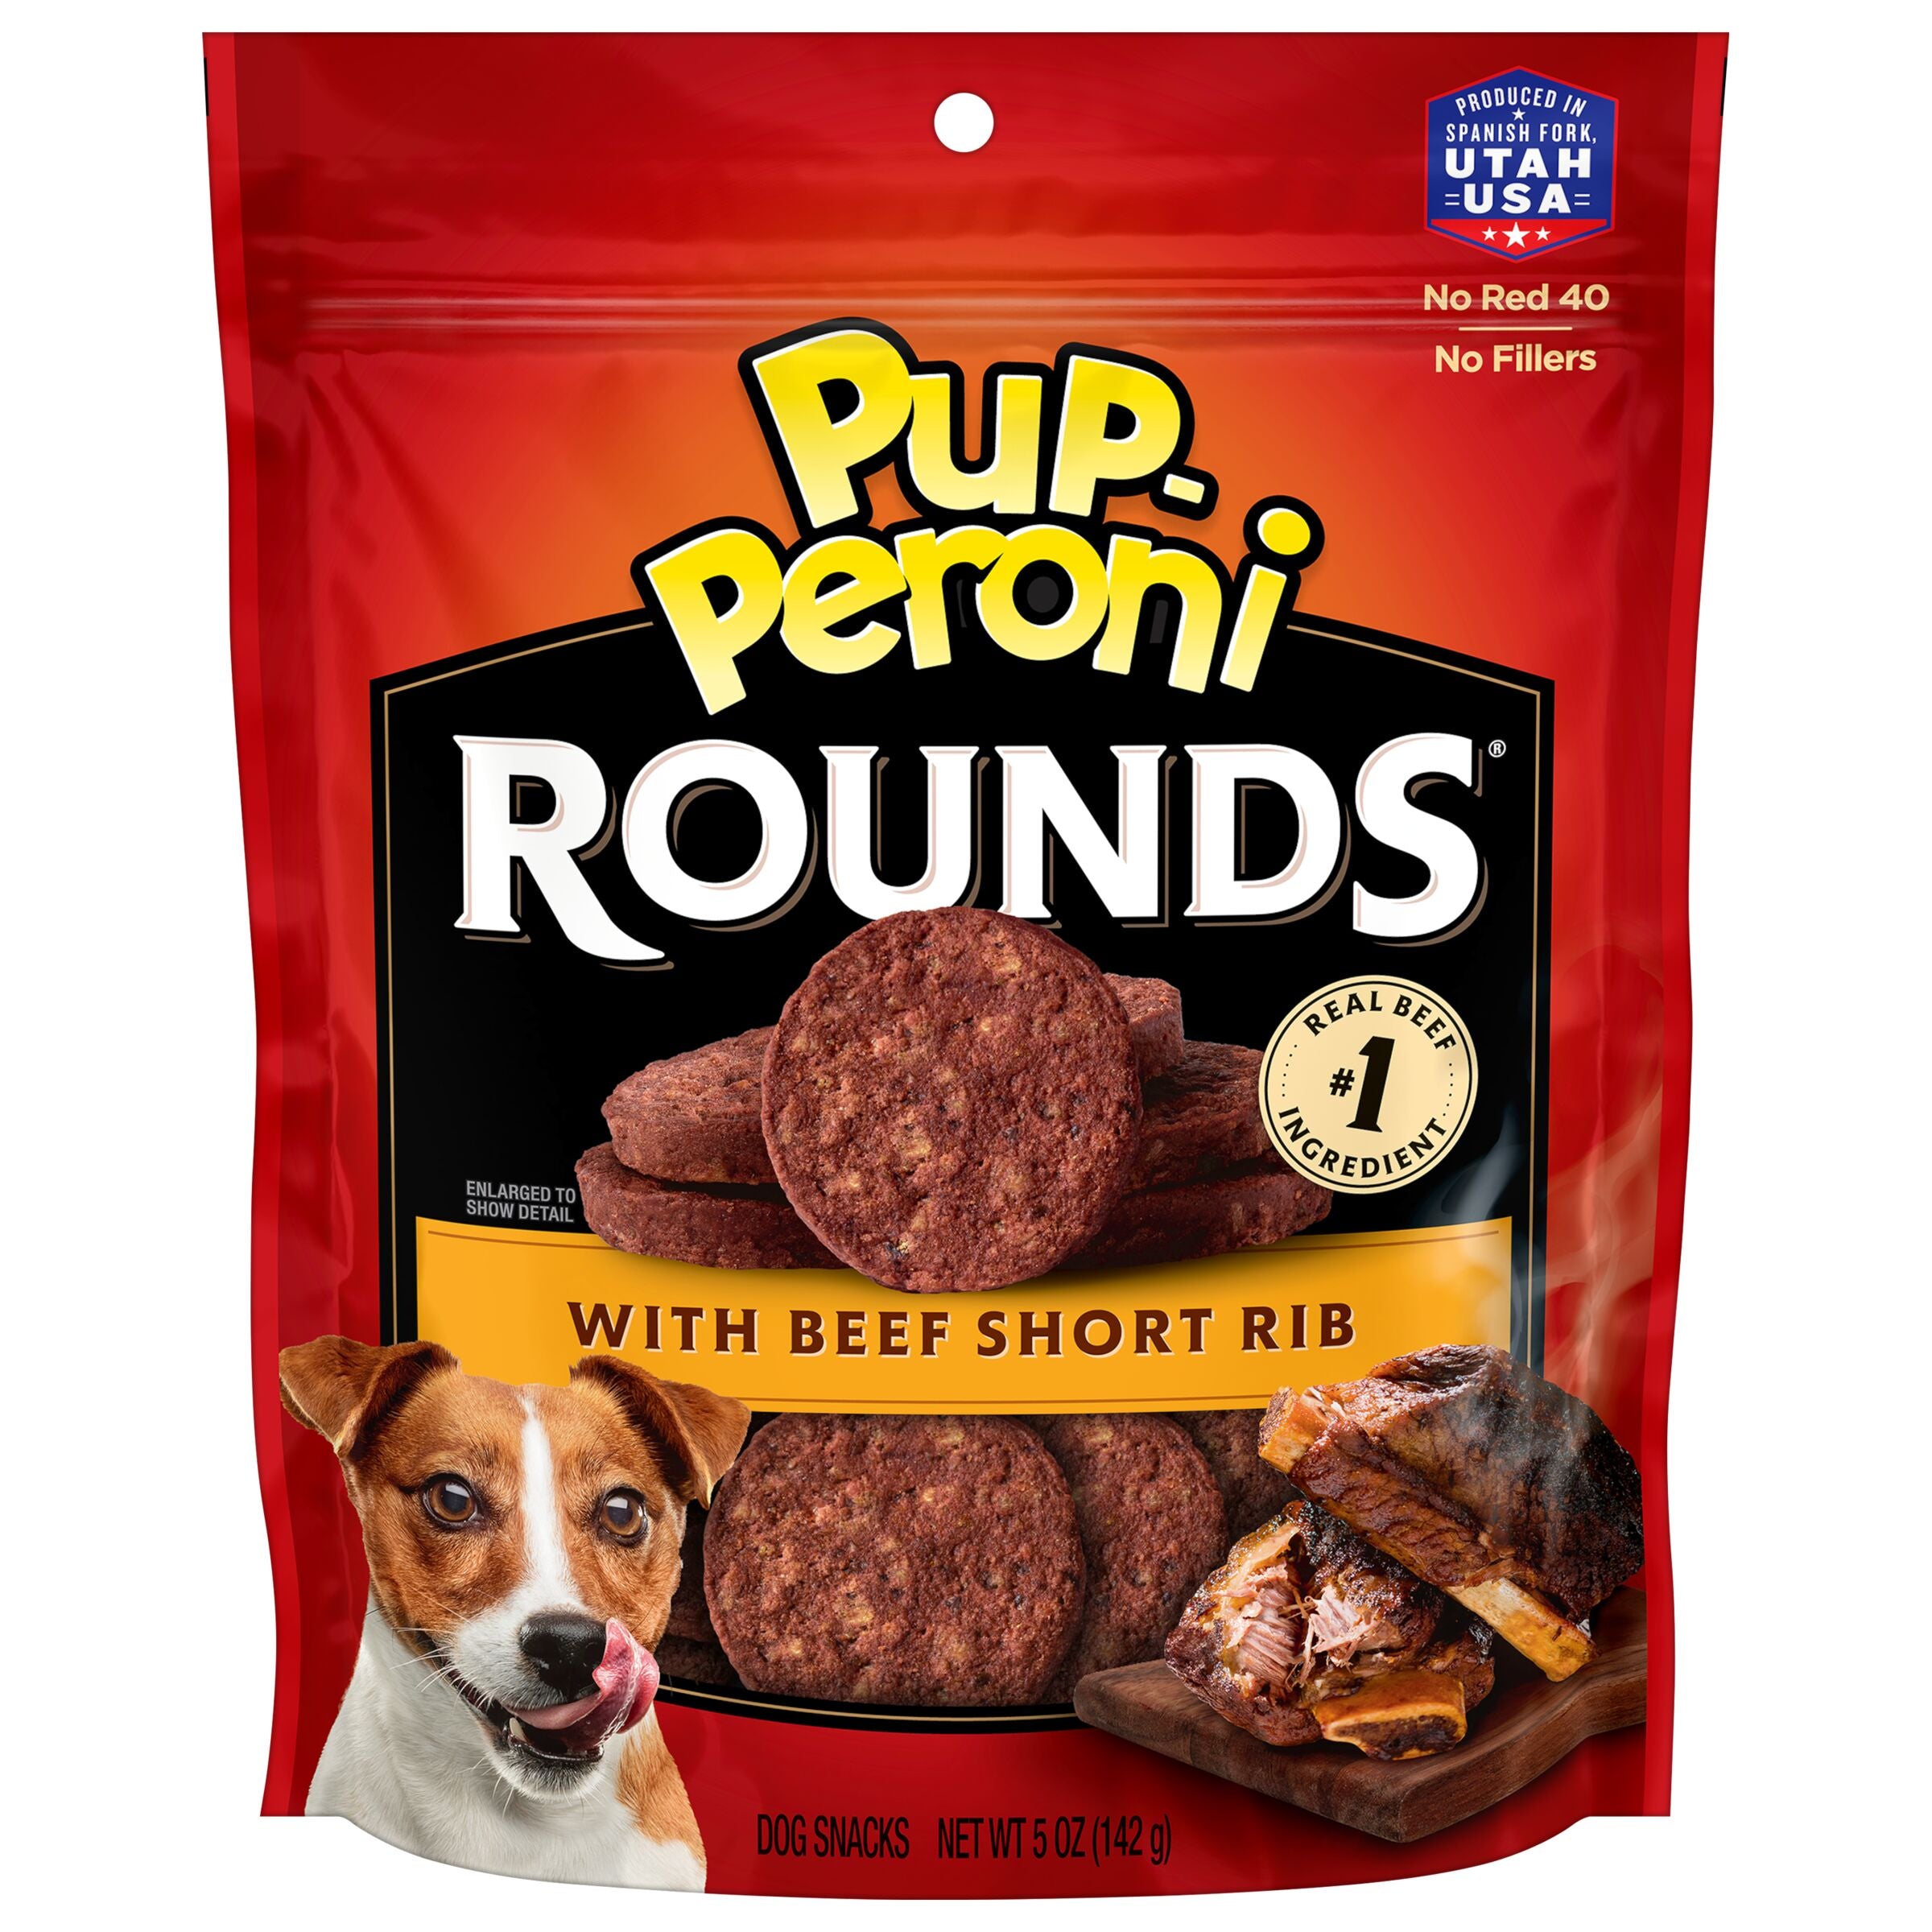 Pup-Peroni Rounds Dog Treats with Beef Short Rib, 5 oz